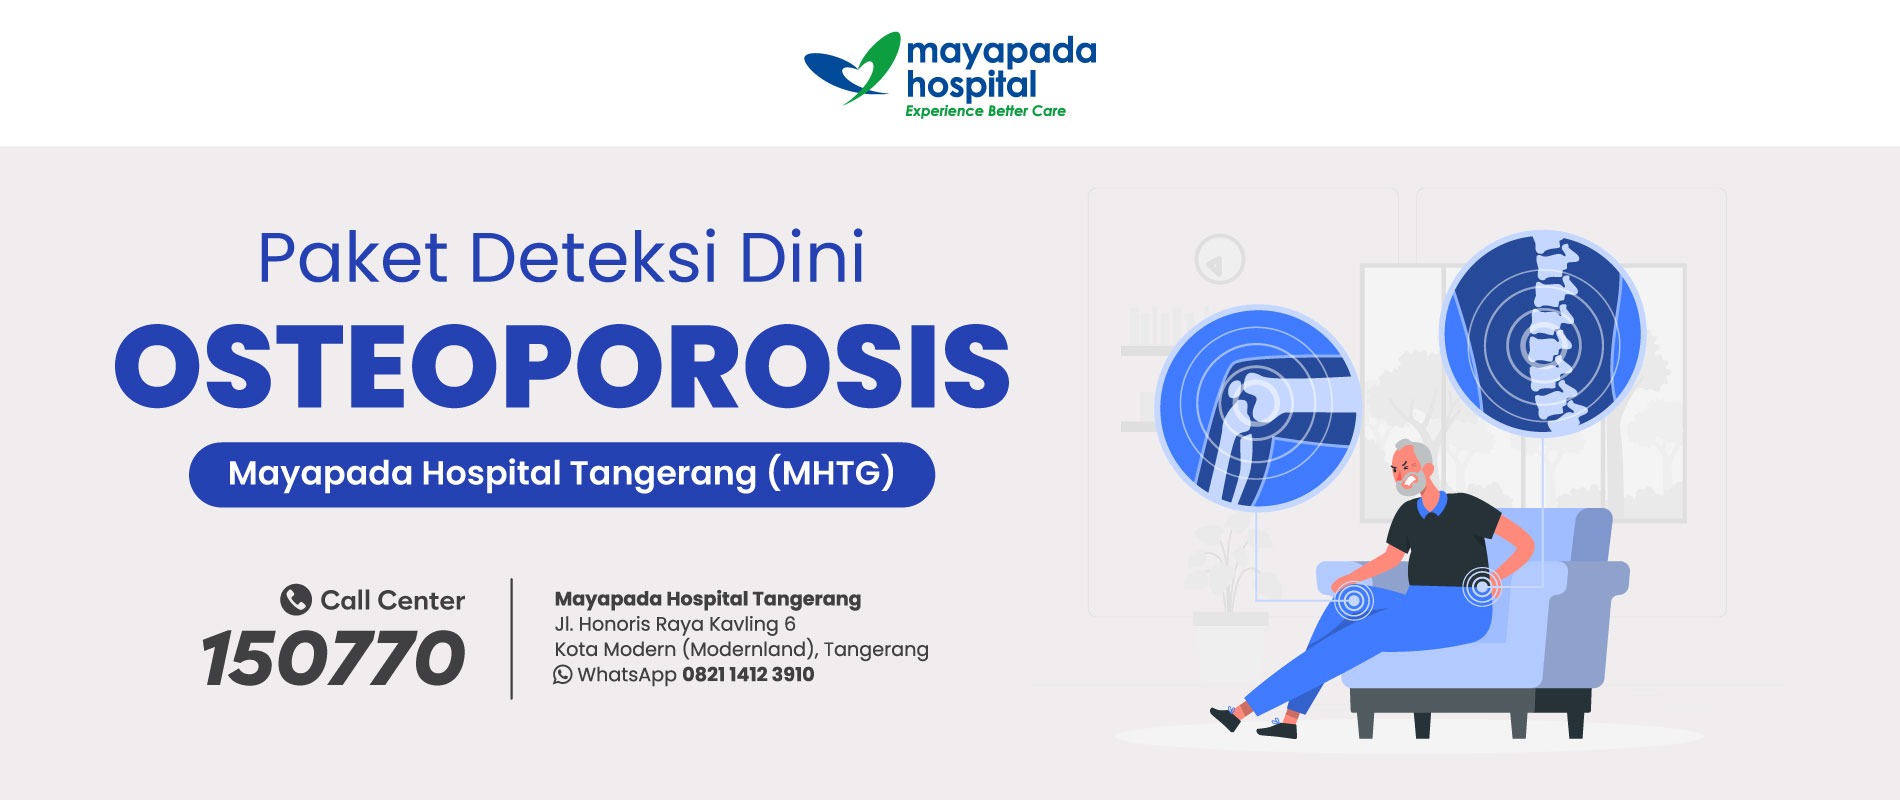 Promo Deteksi Dini Osteoporosis Mayapada Hospital Tangerang (MHTG) IMG